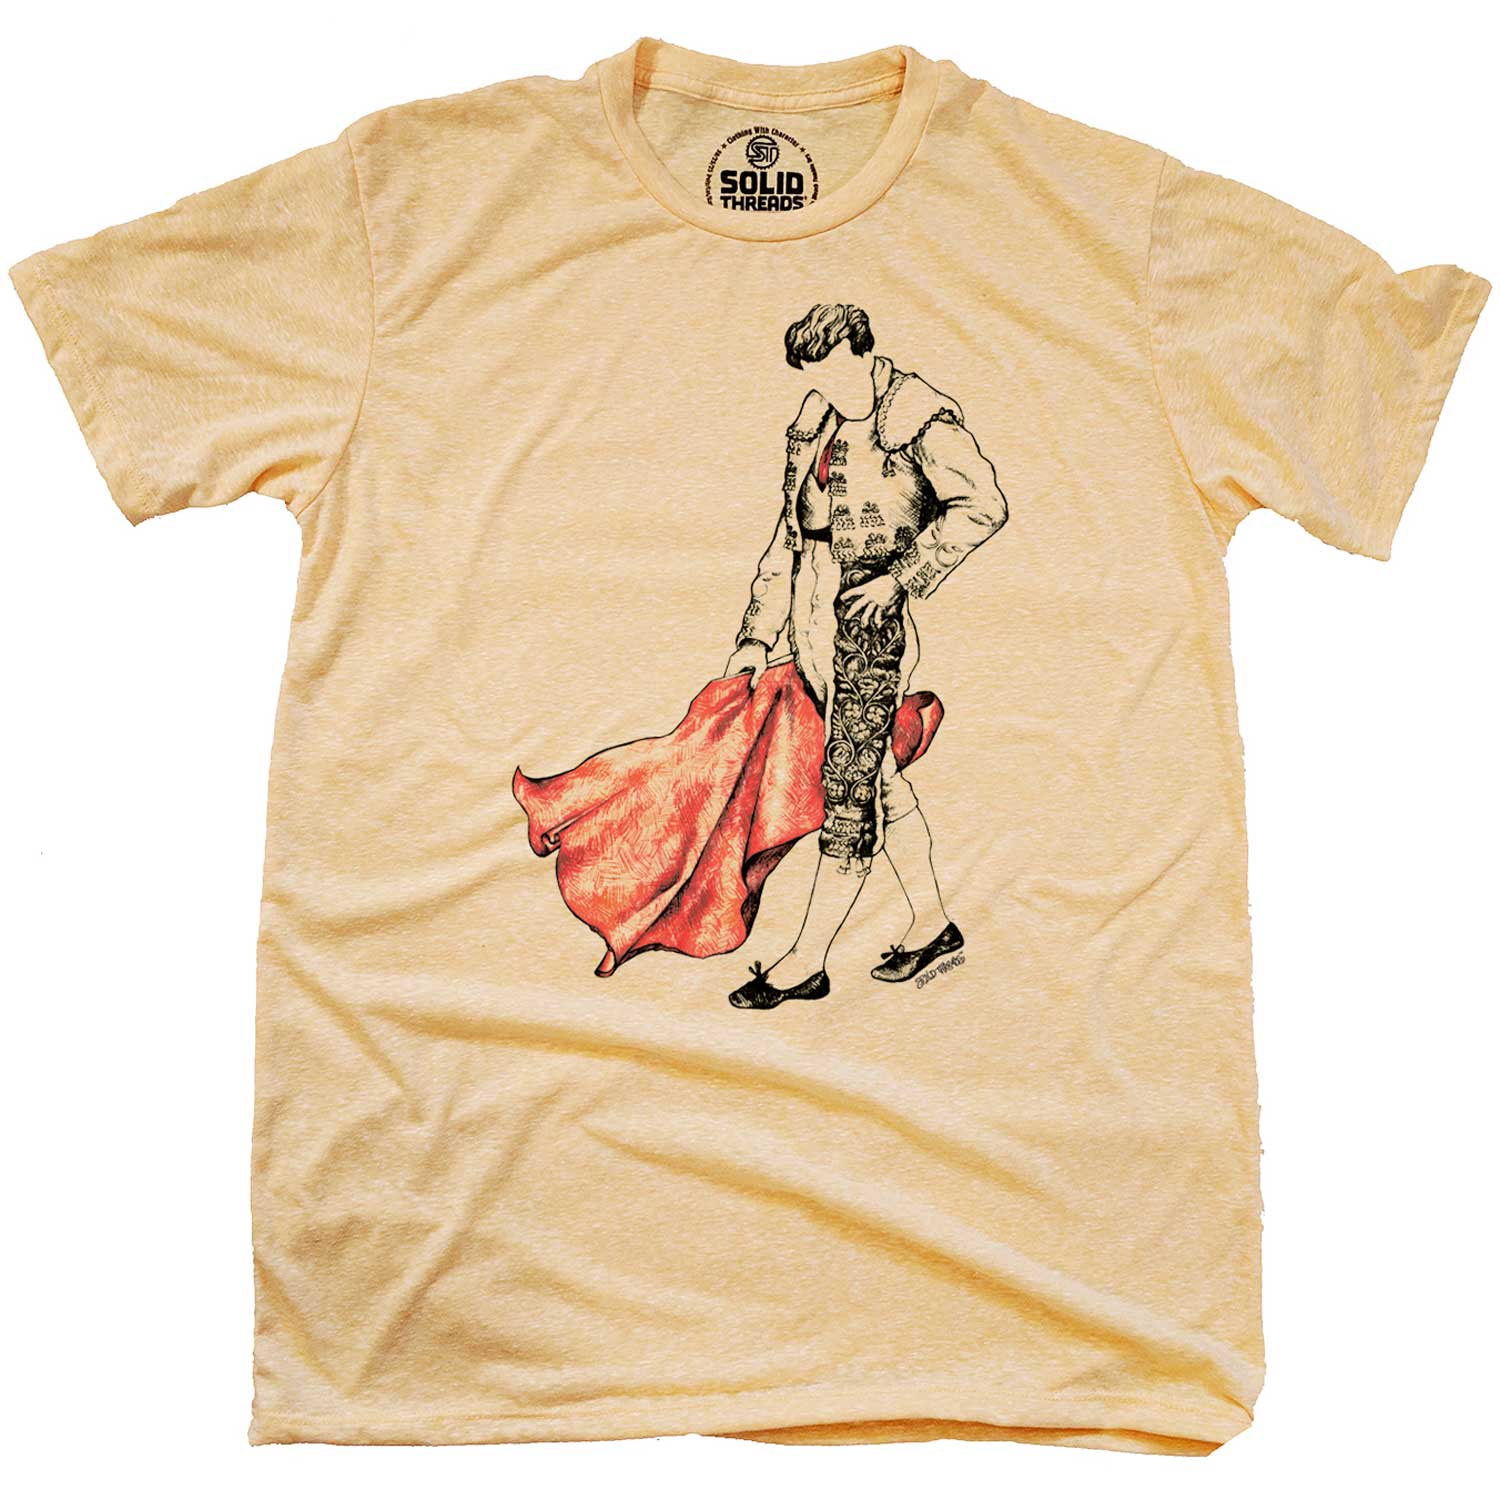 Men's Matador Cool Artsy Graphic T-Shirt | Vintage Bull Fighter Tee | Solid Threads